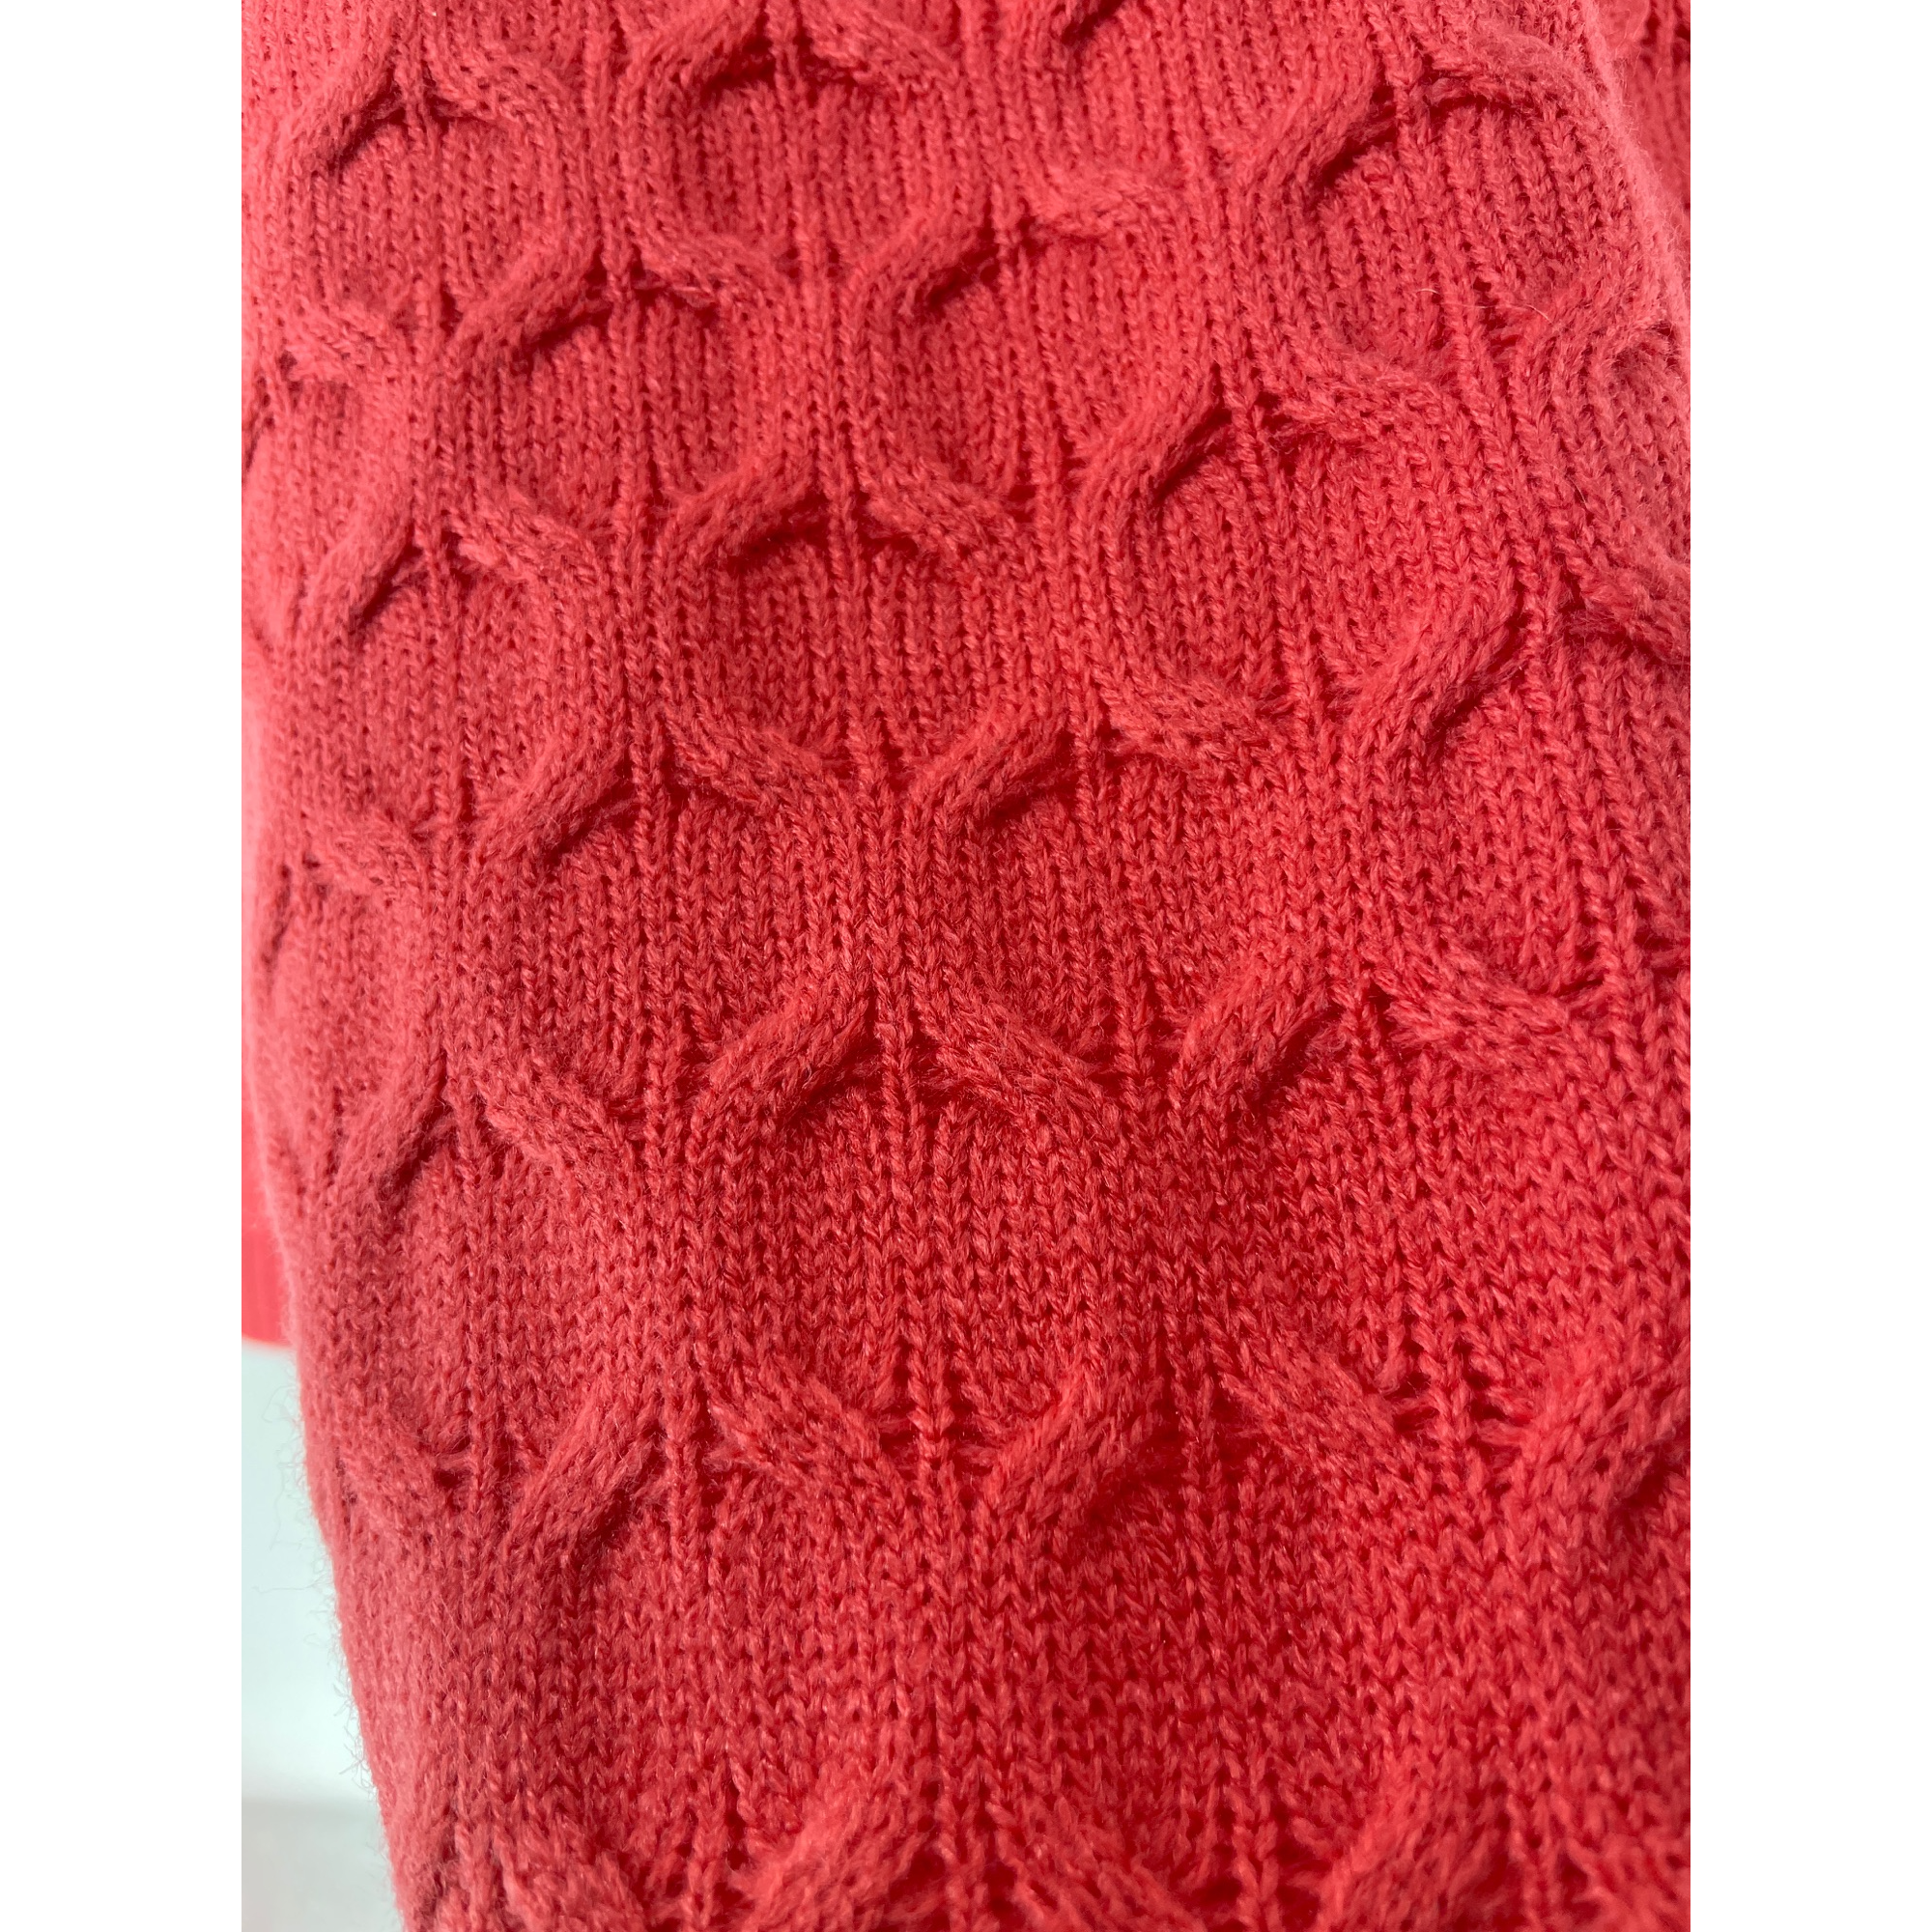 Sag Harbor Large Pink Knit Sweater